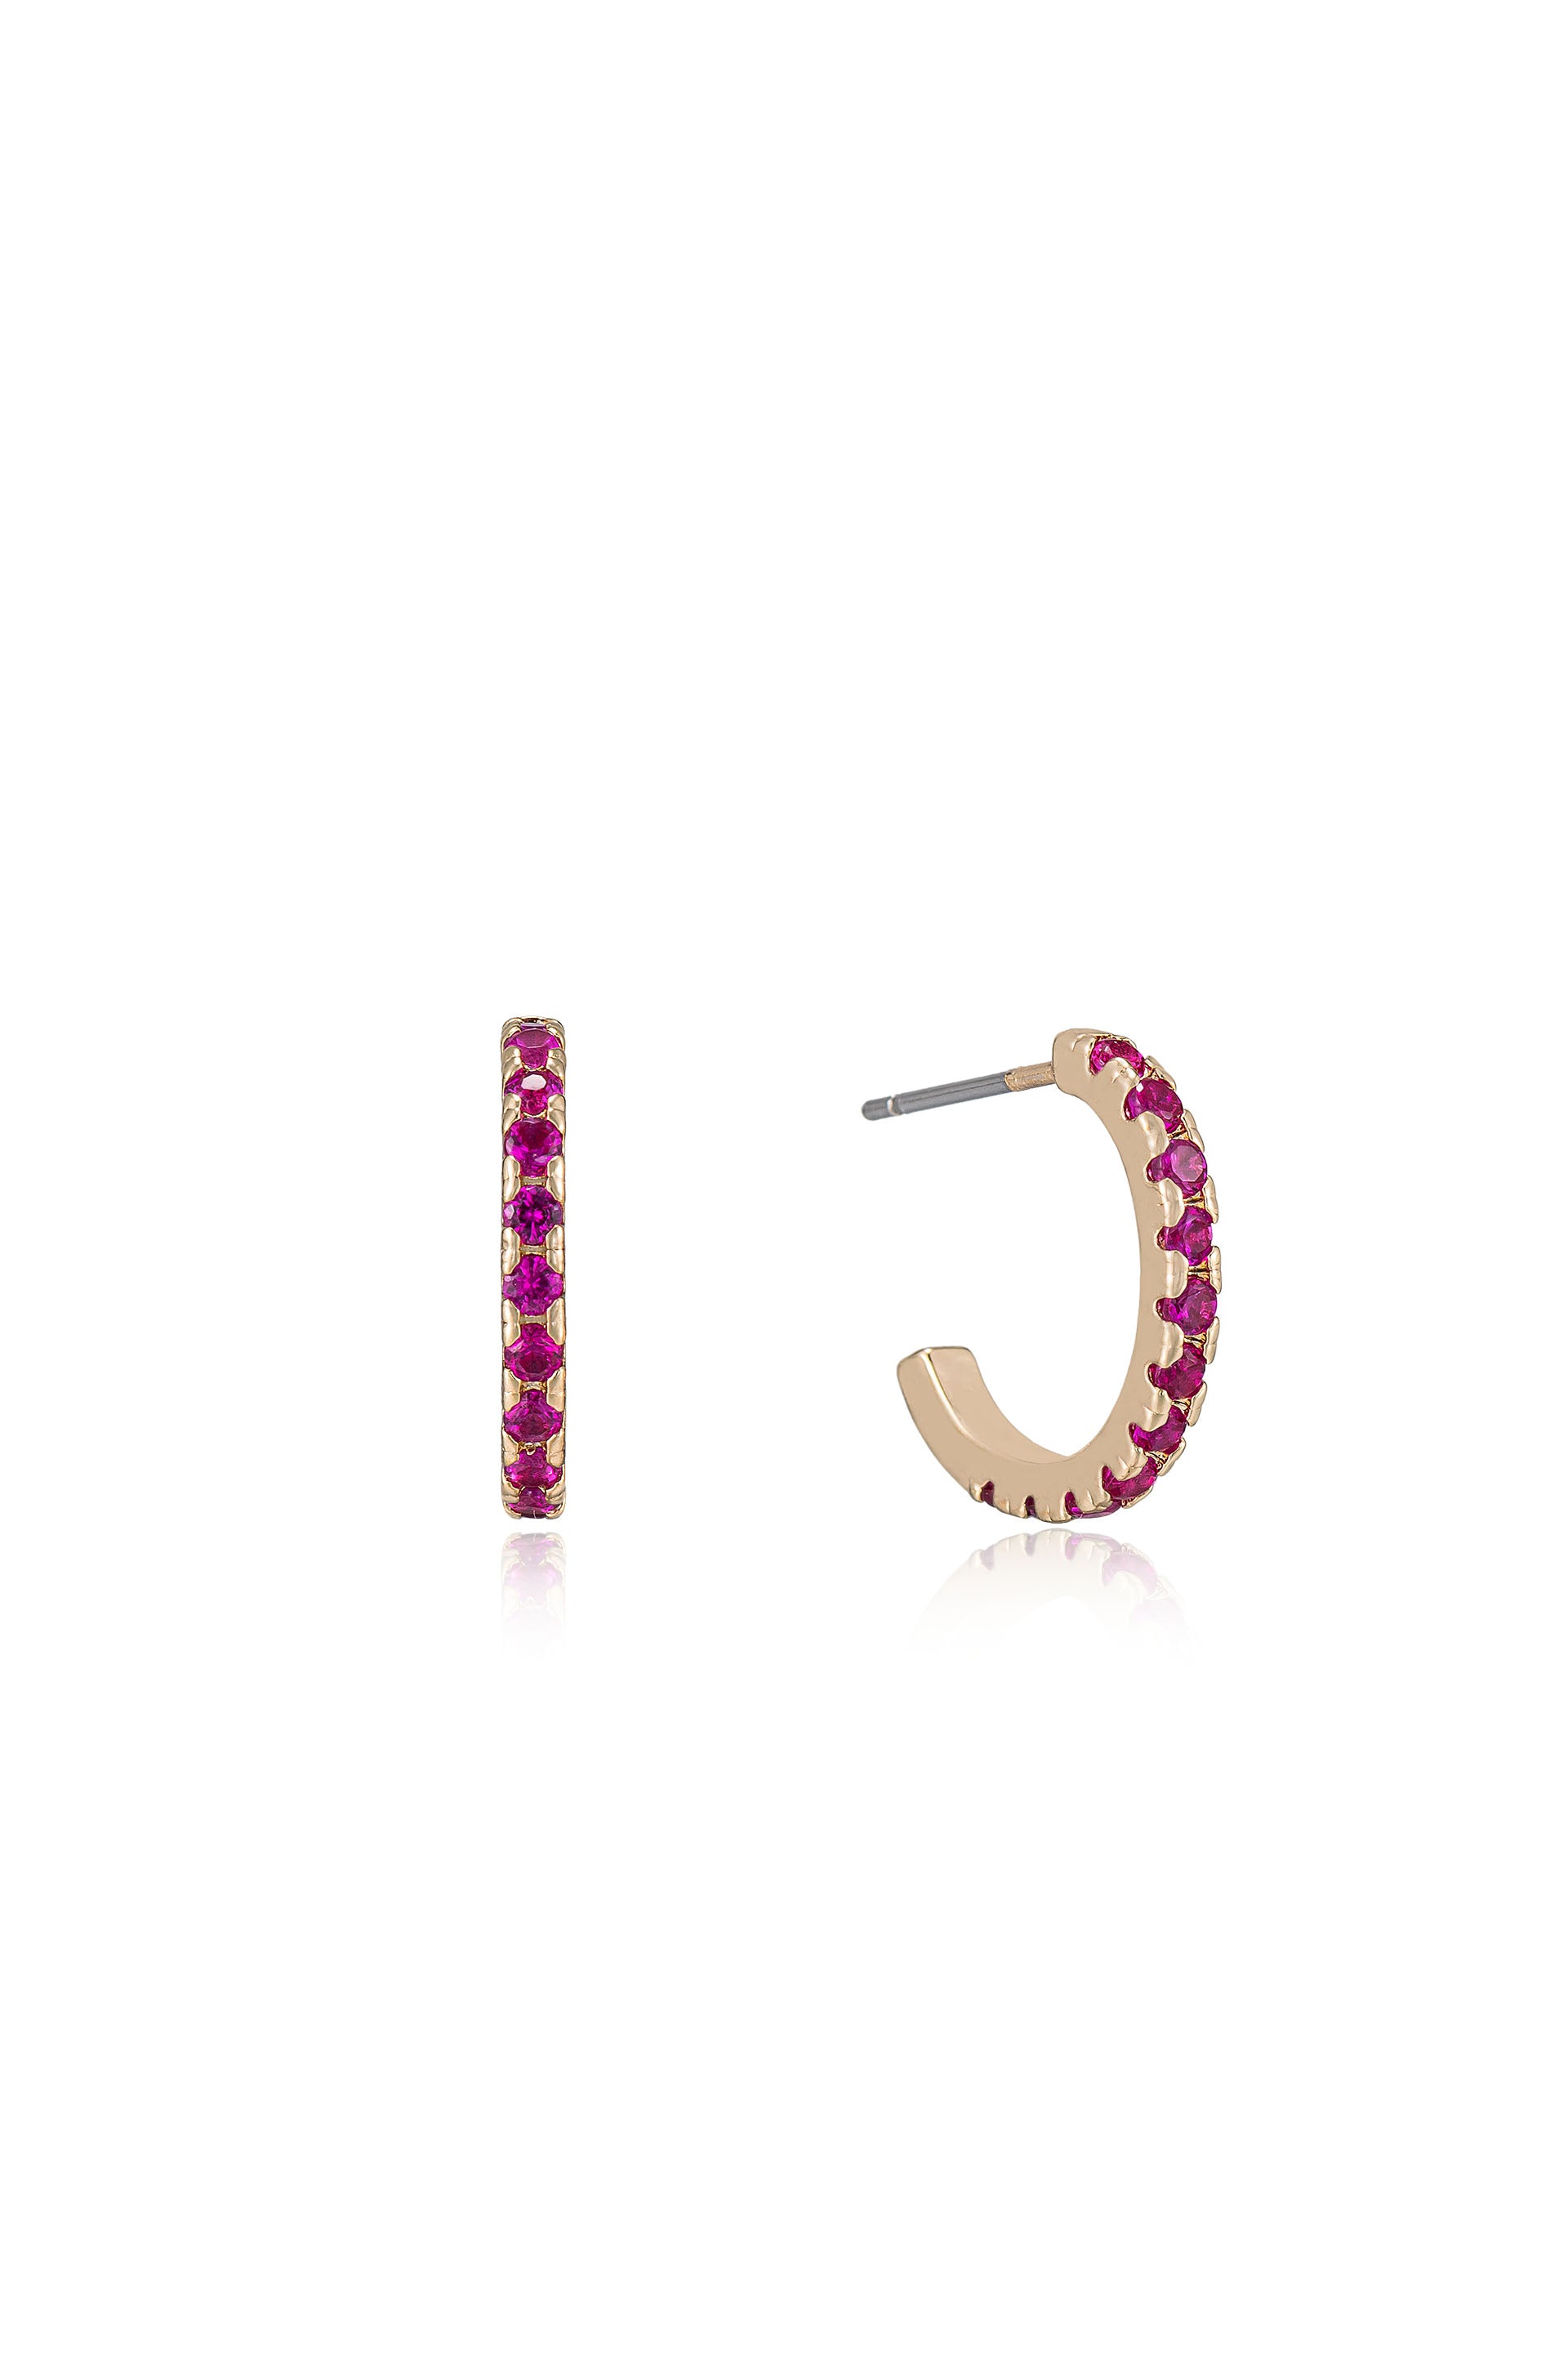 Colorful Crystal 18k Gold Plated Huggie Earrings in ruby